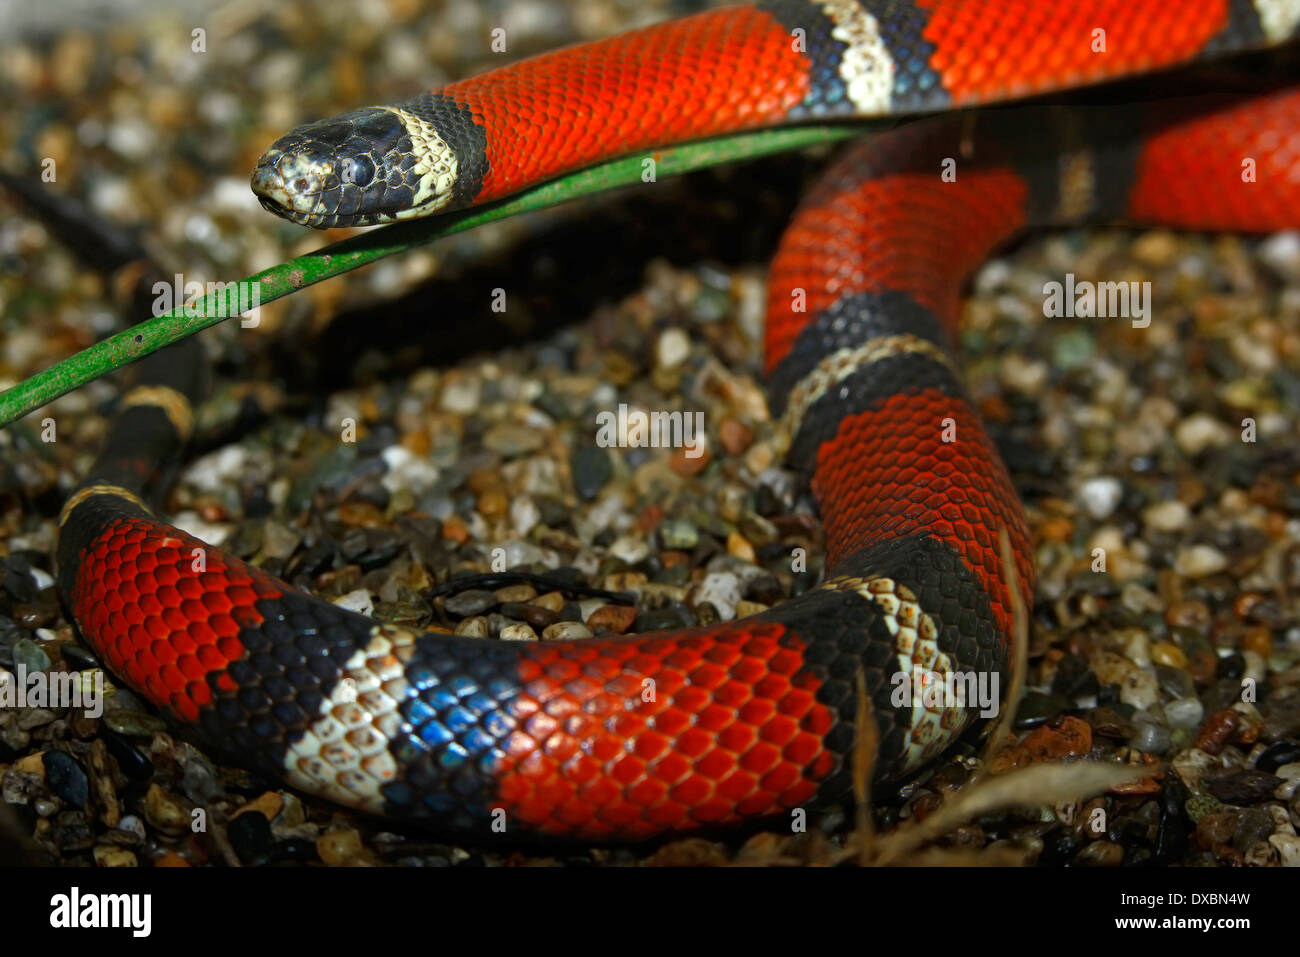 False Coral Snake (Lampropeltis triangulum) Stock Photo